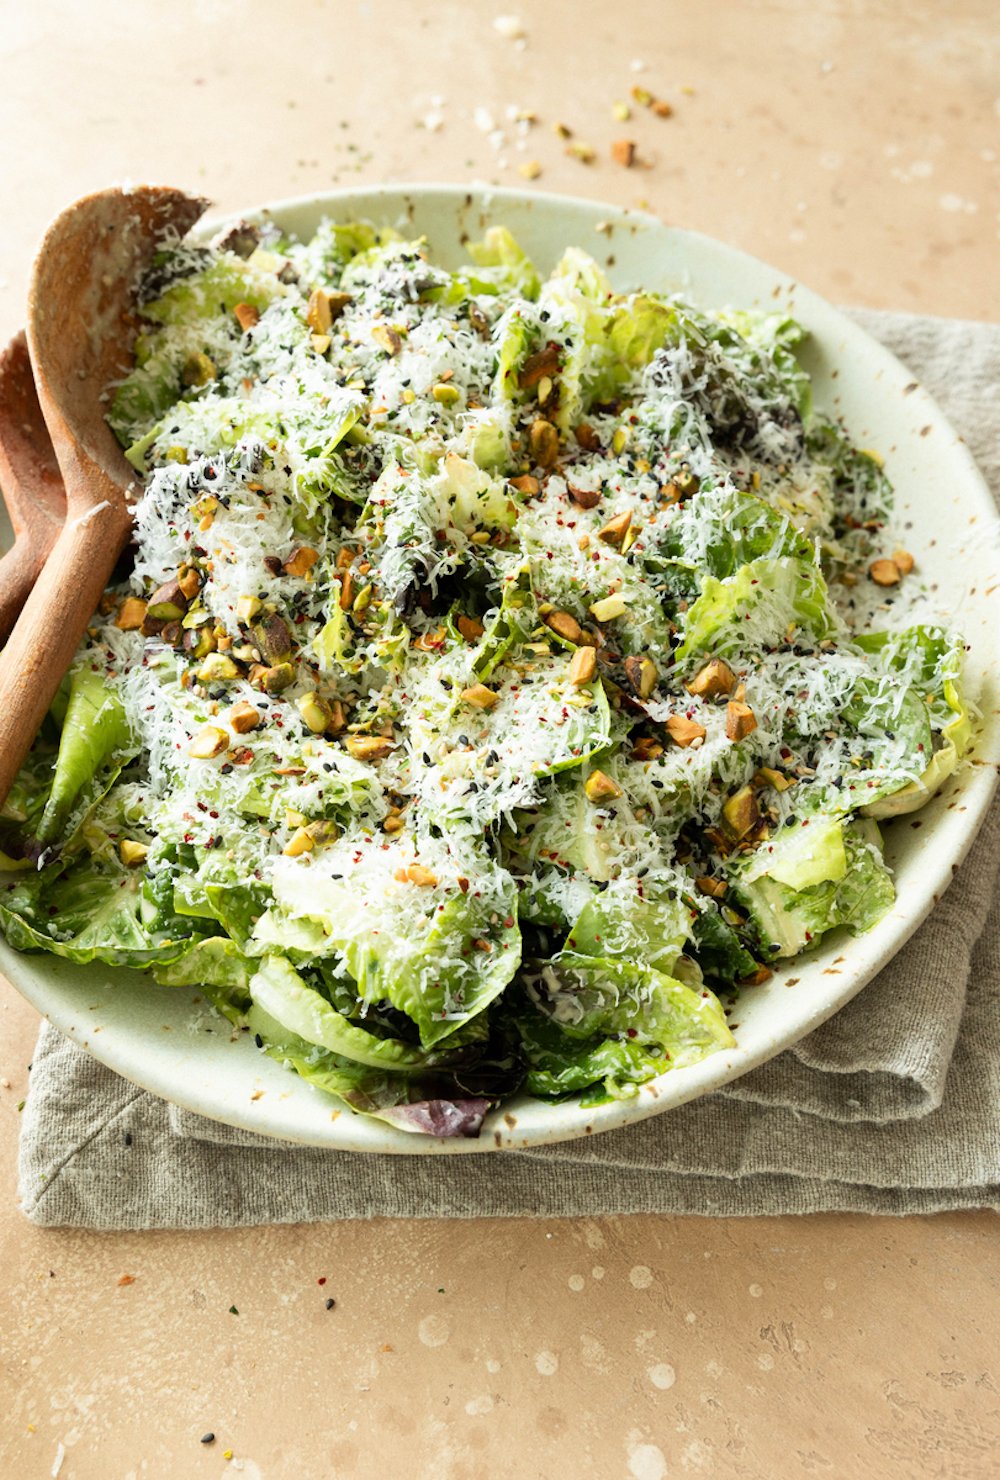 Greens salad with sesame dressing.